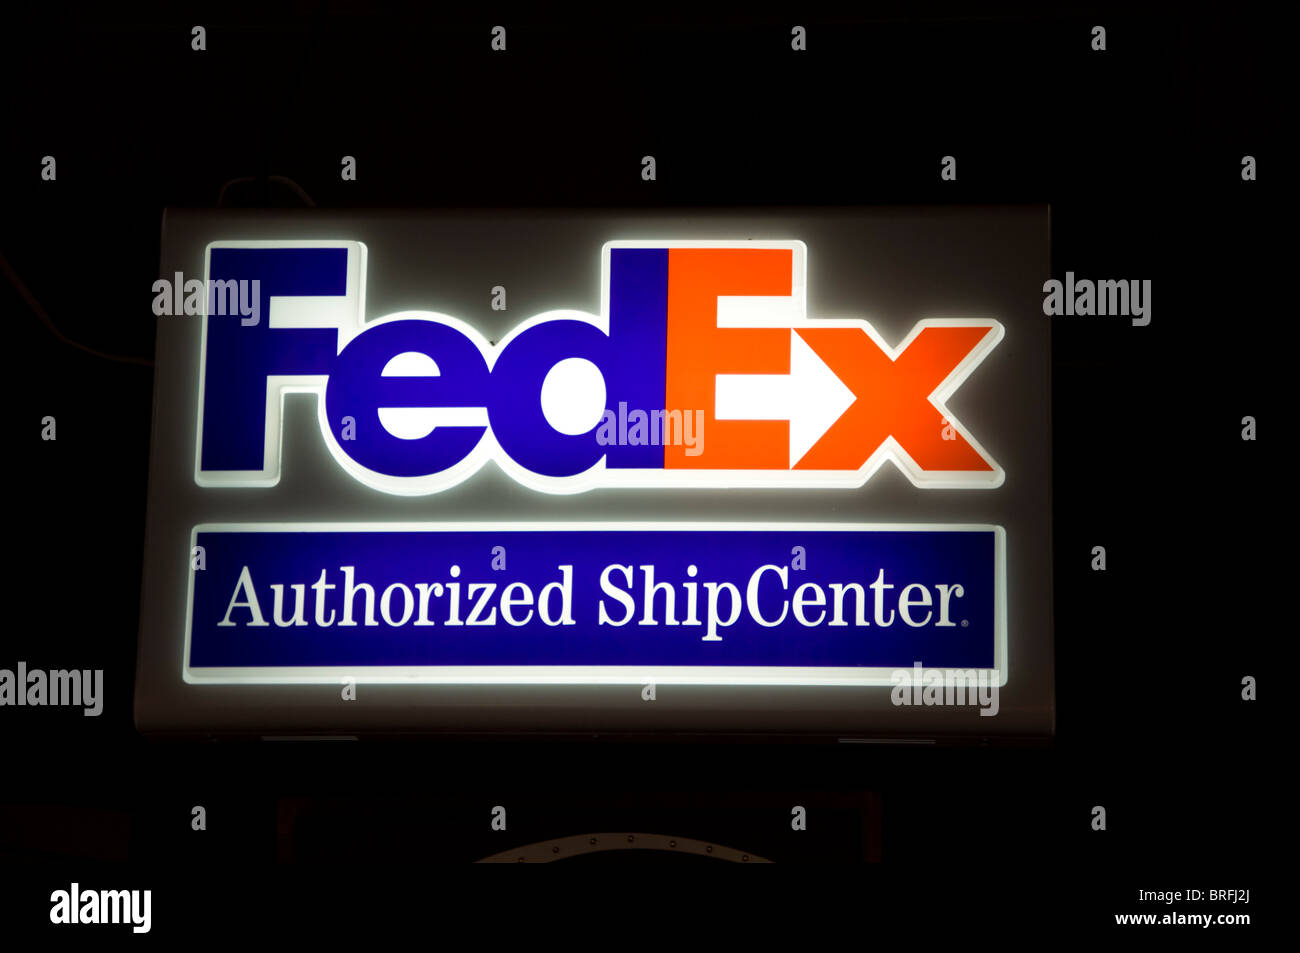 fedex techconnect logo